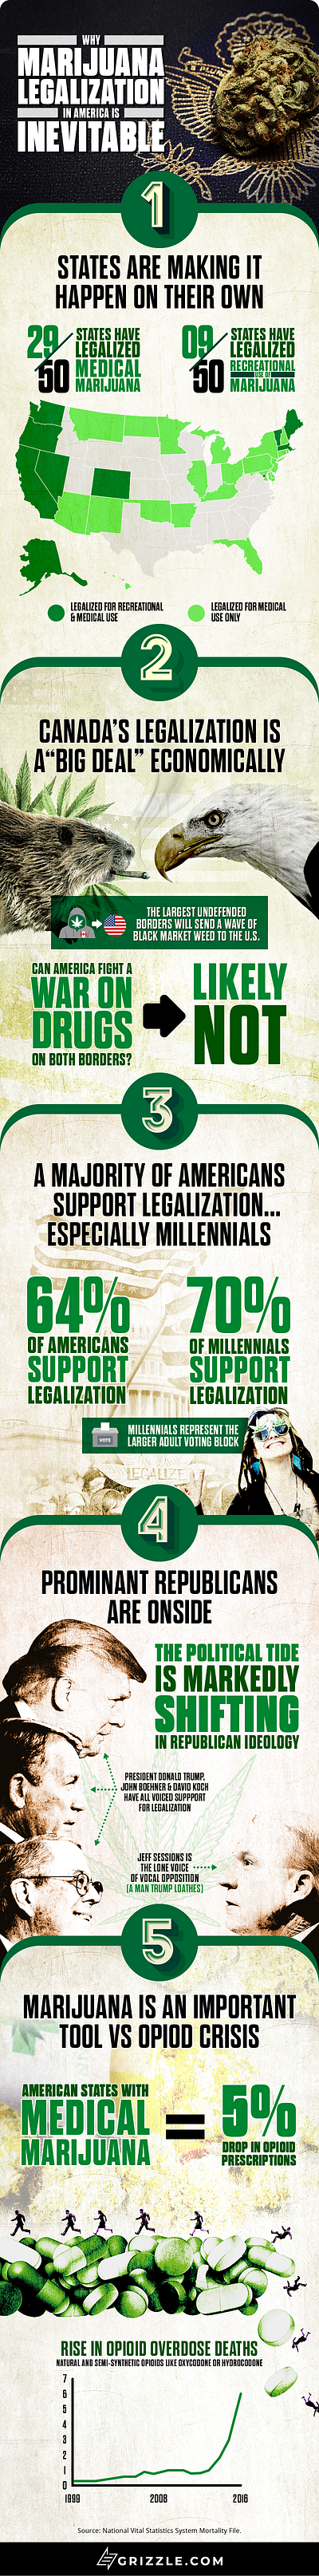 U.S. Cannabis Legalization Infographic